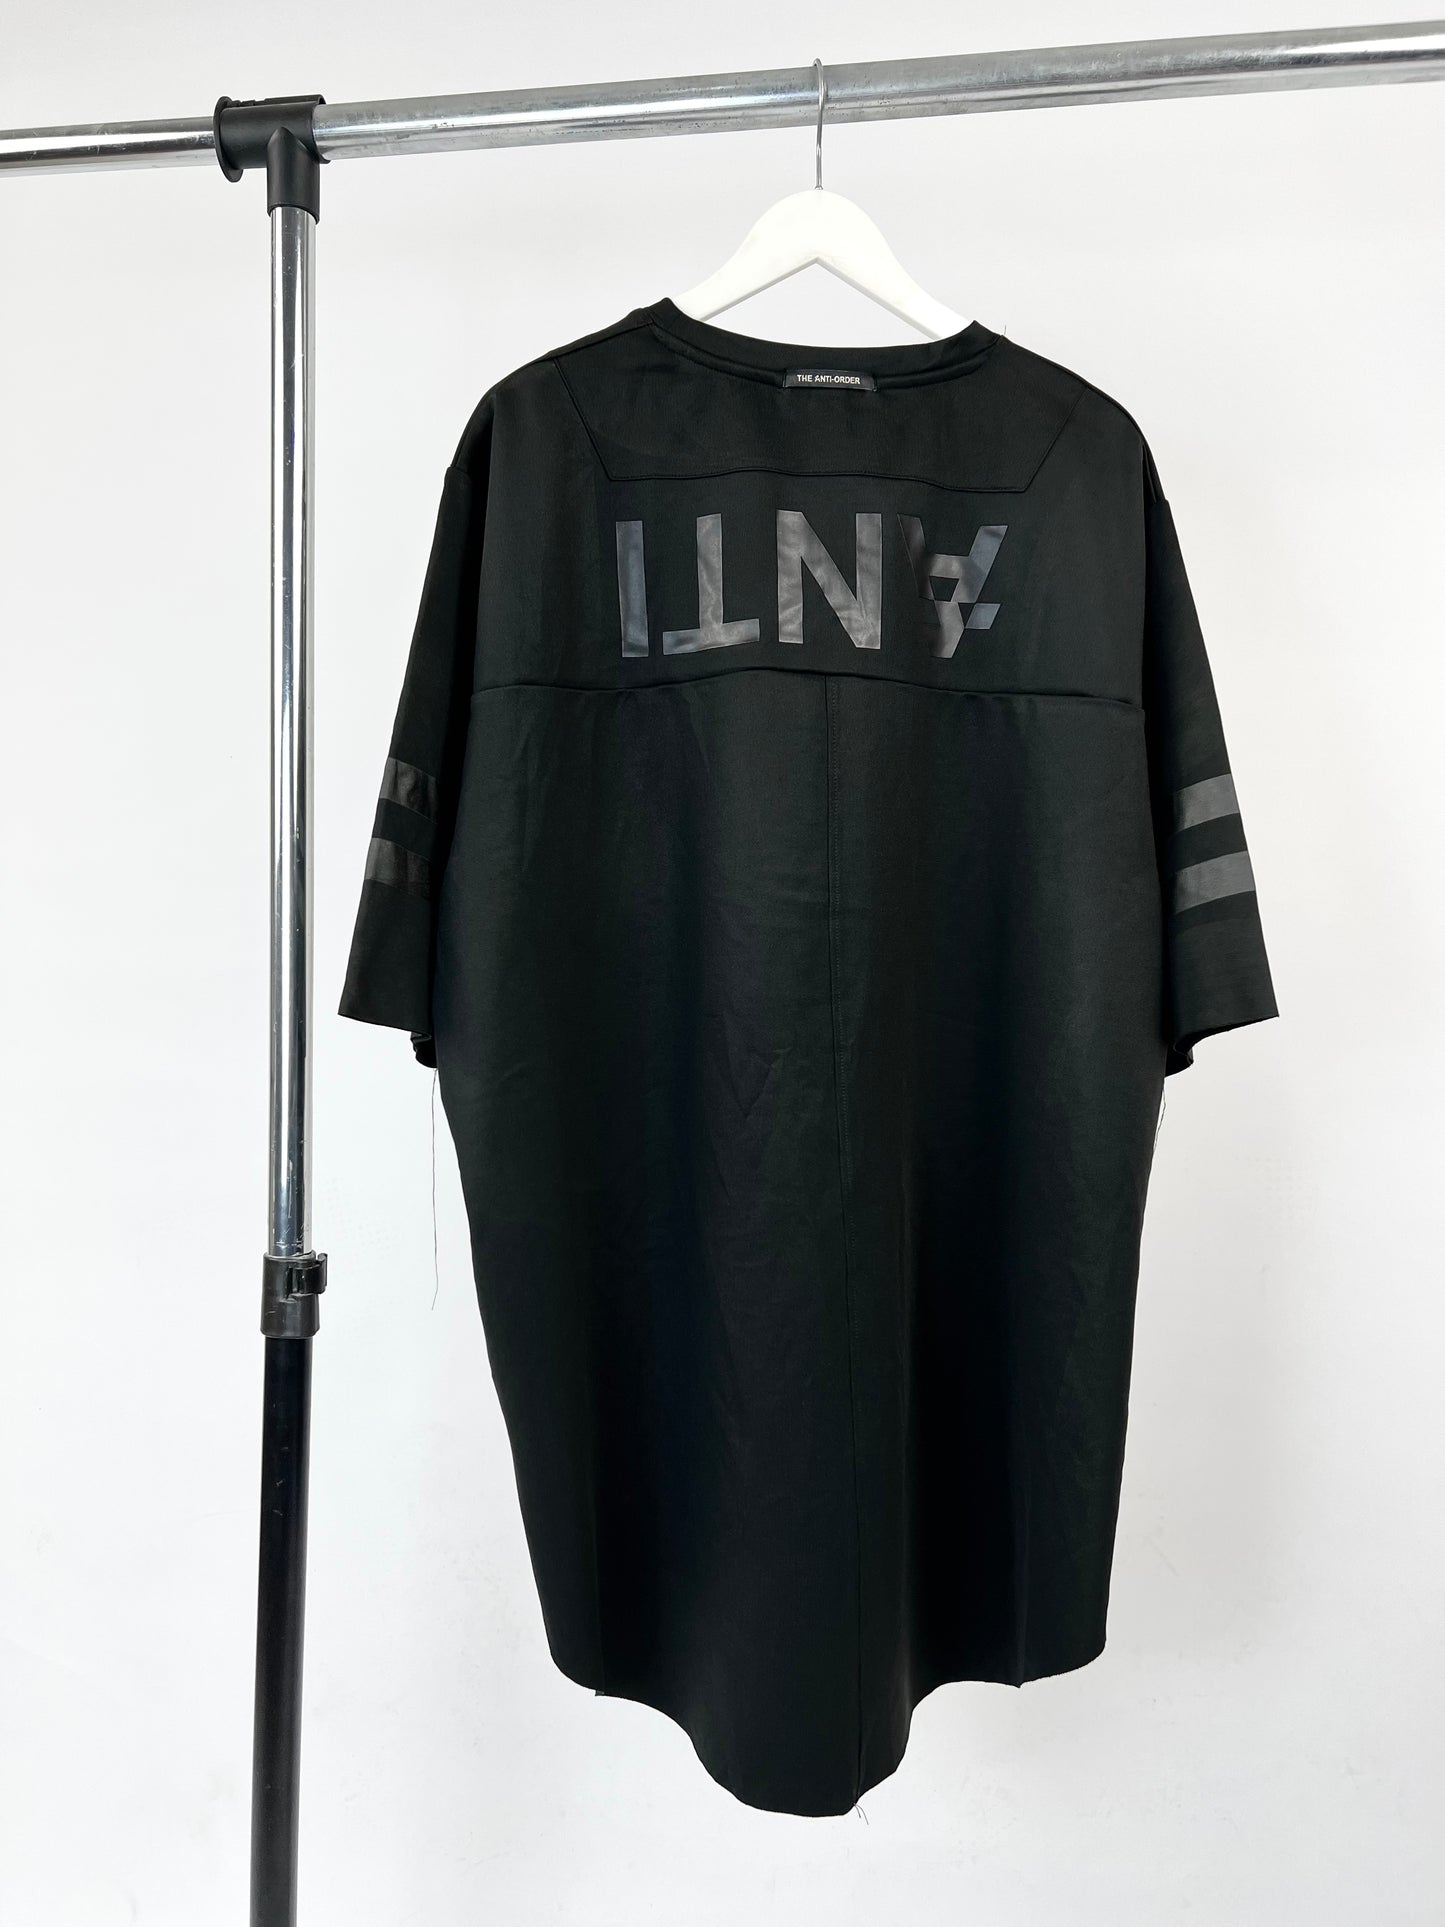 Anti Order Baseball T-shirt in black